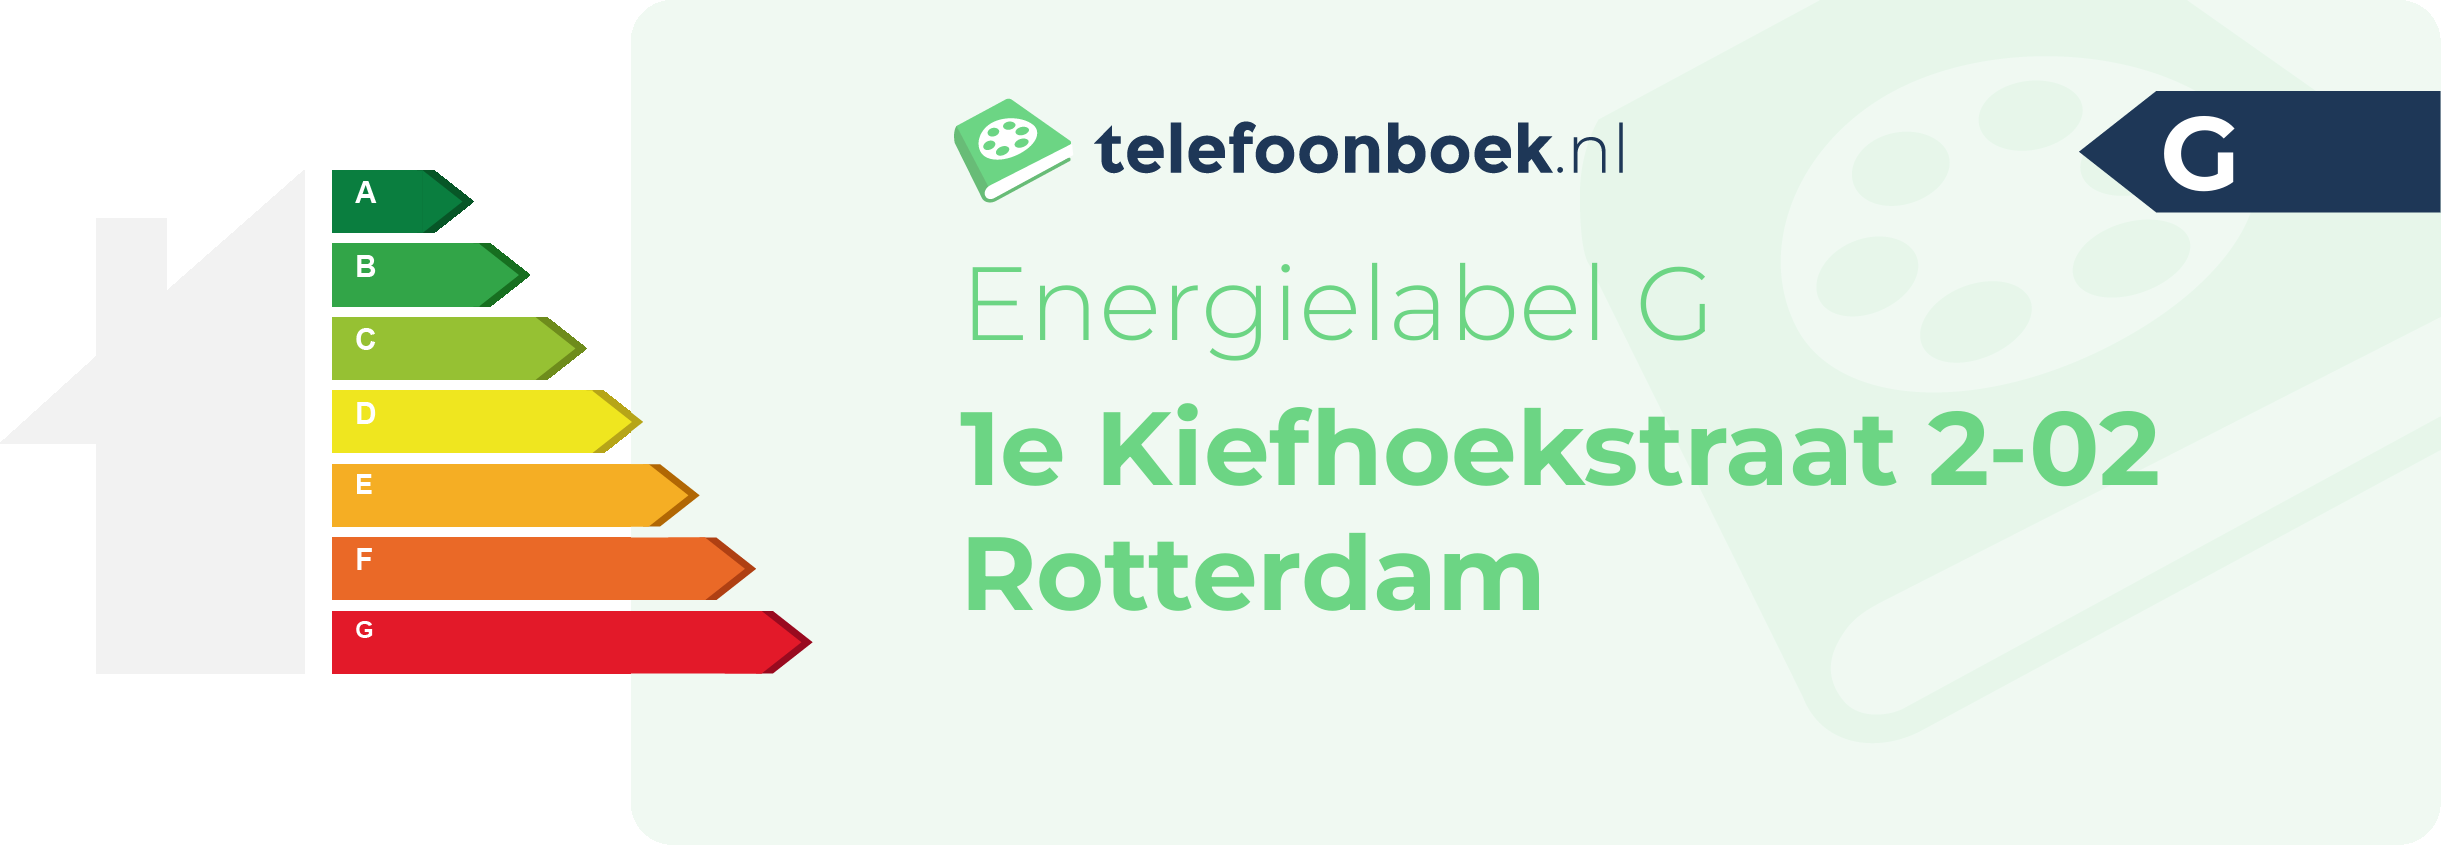 Energielabel 1e Kiefhoekstraat 2-02 Rotterdam